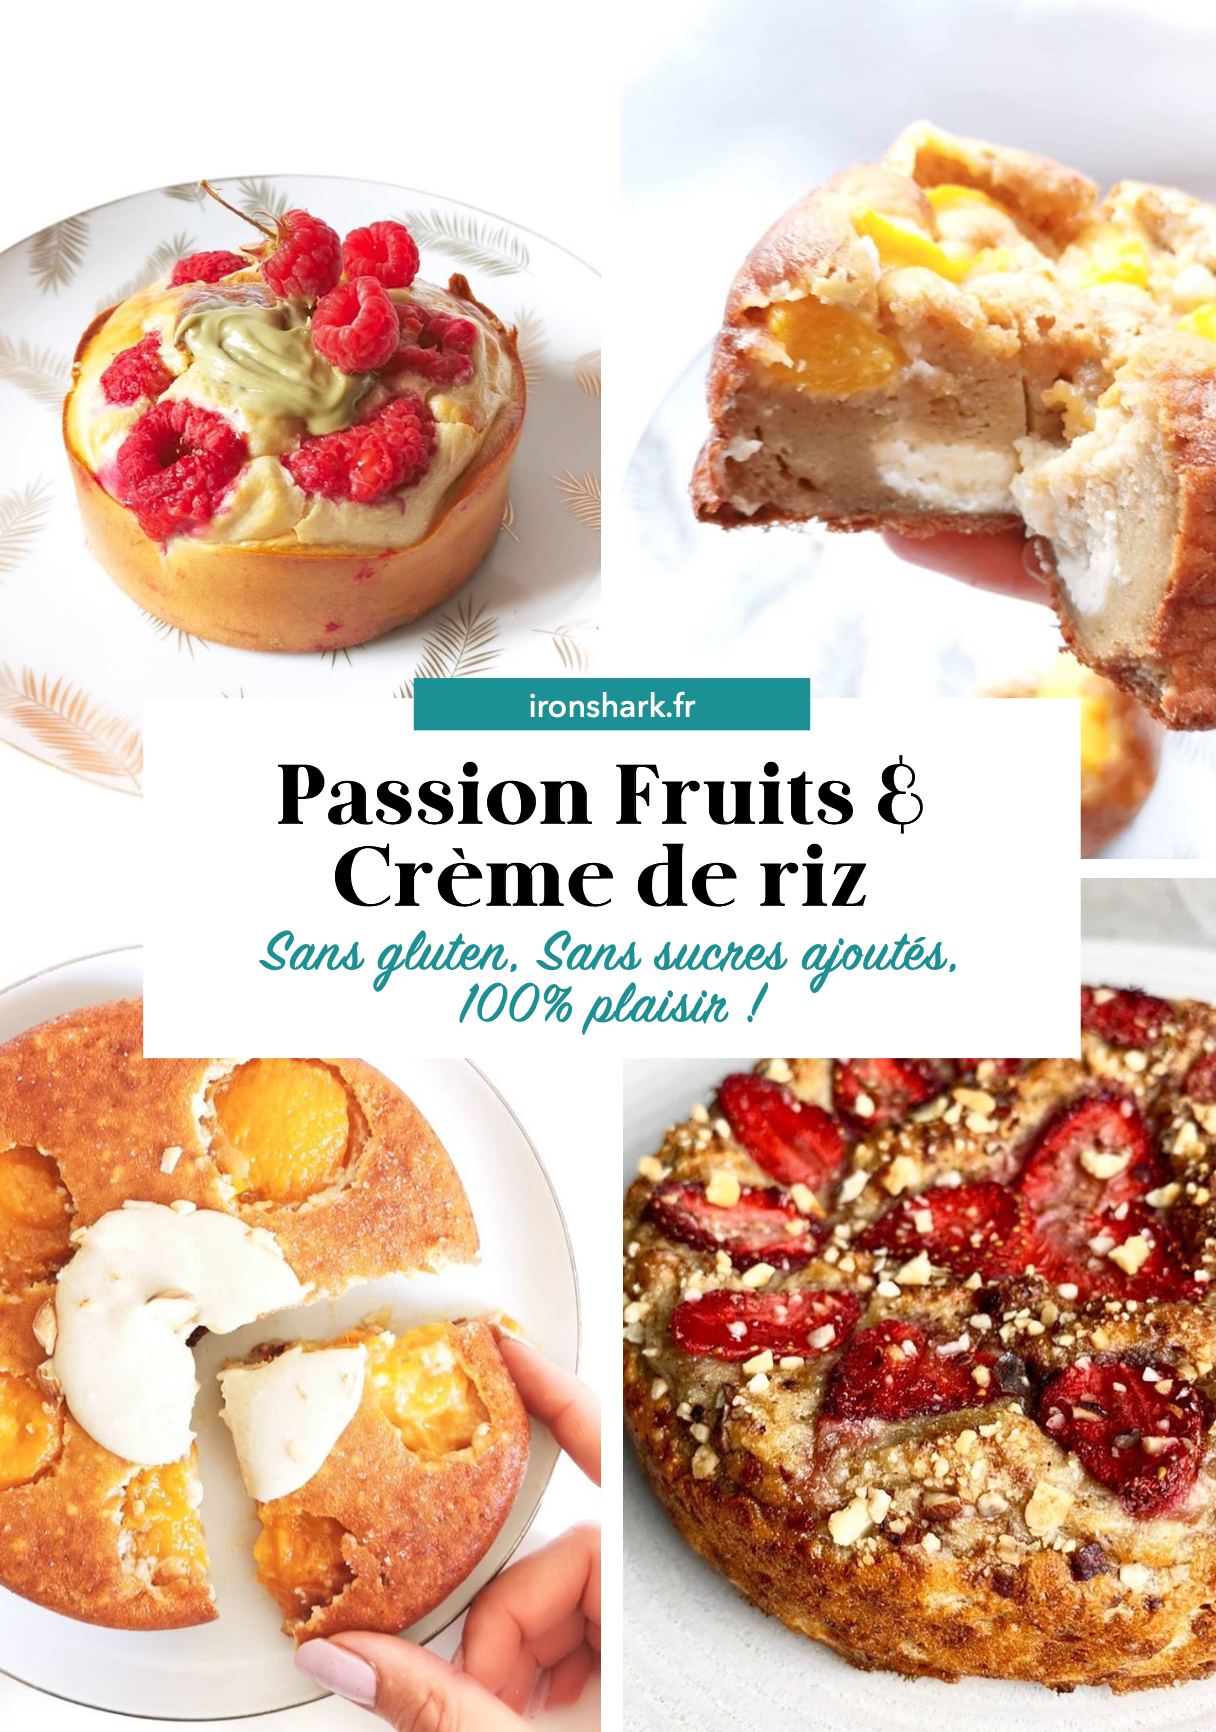 Ebook : passion fruits & crème de riz